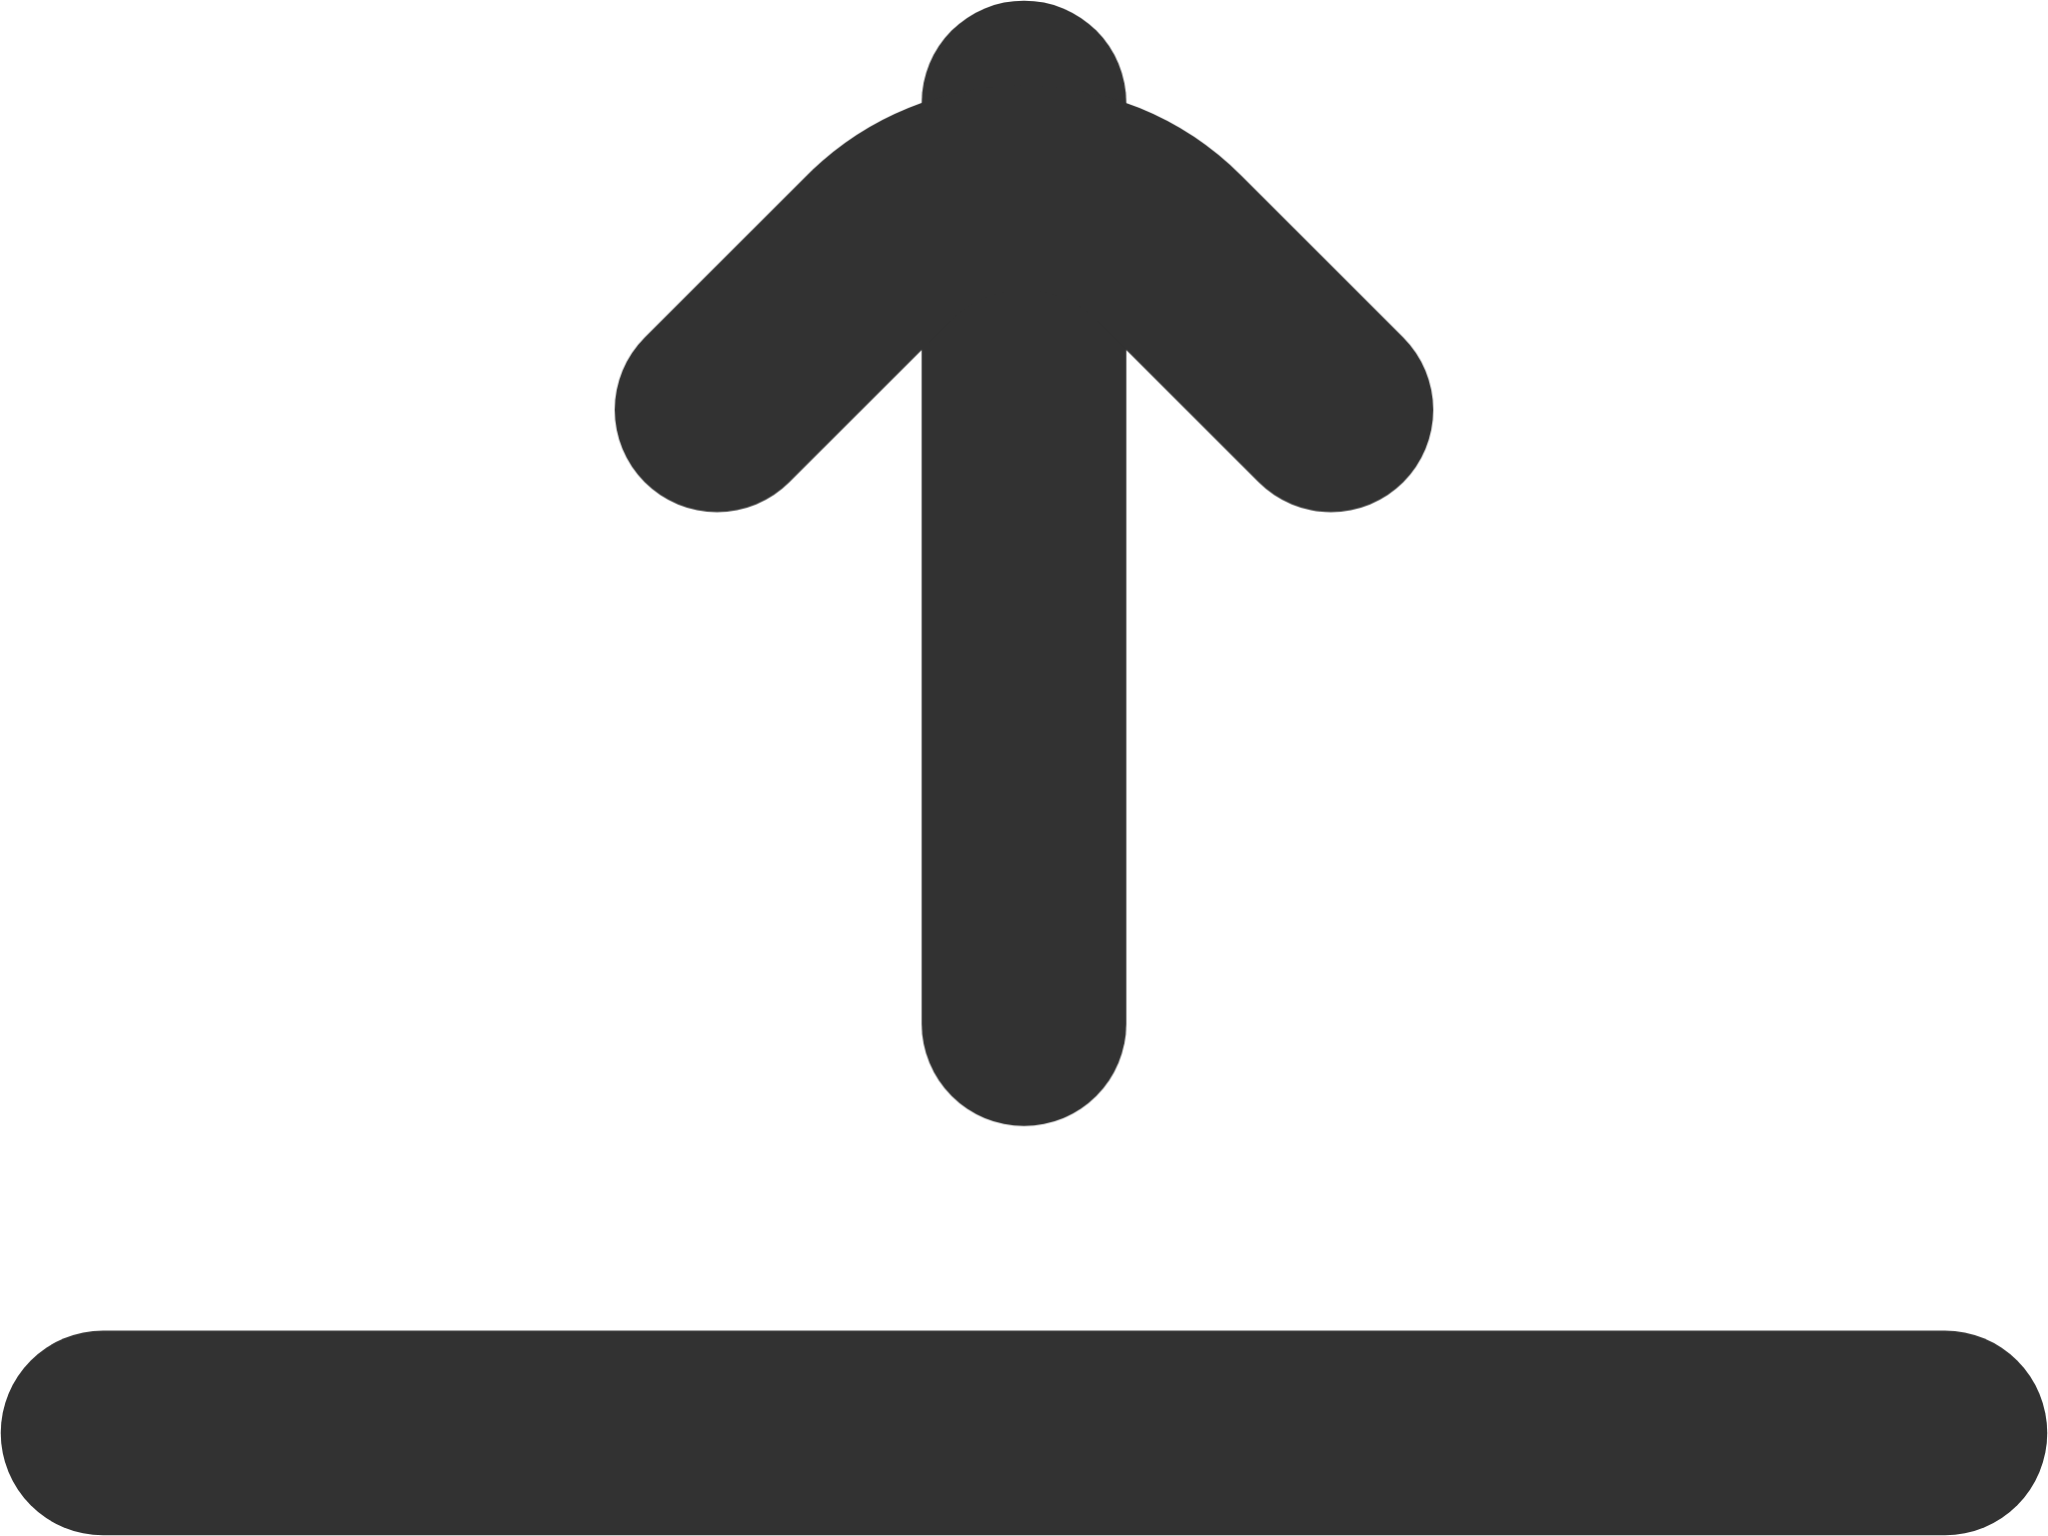 align arrow up icon